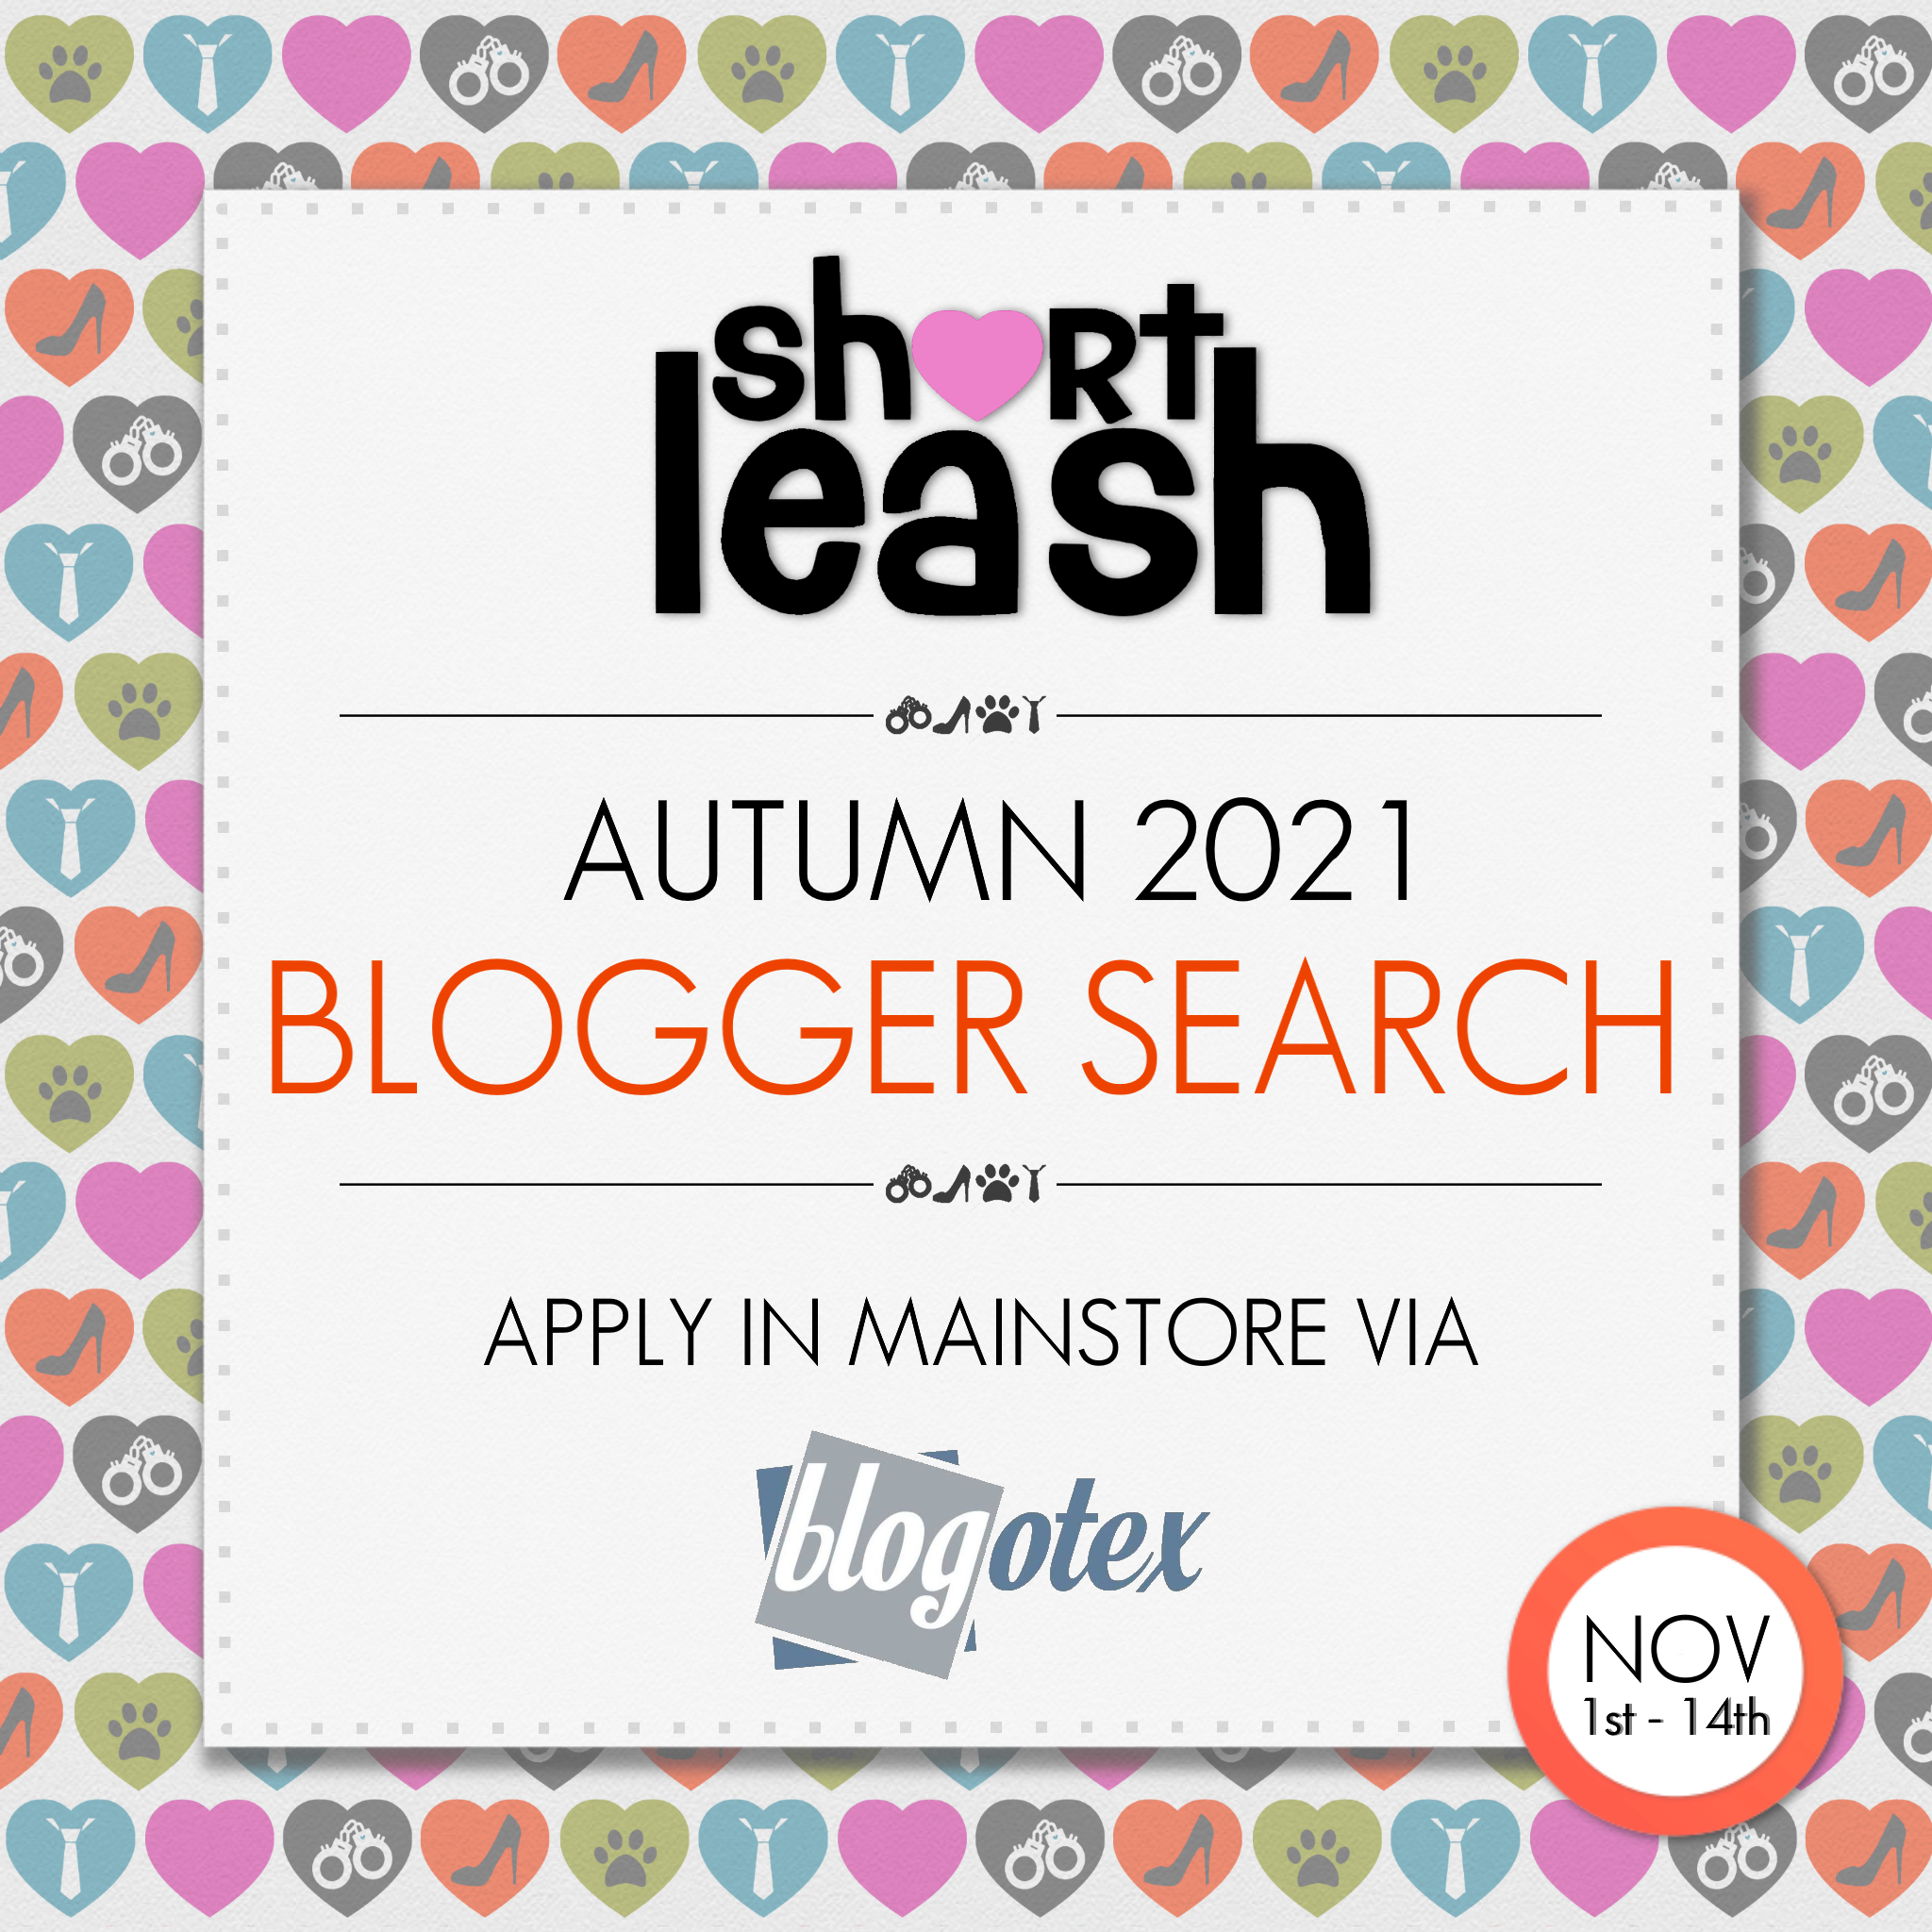 Short Leash Autumn 2021 Blogger Search